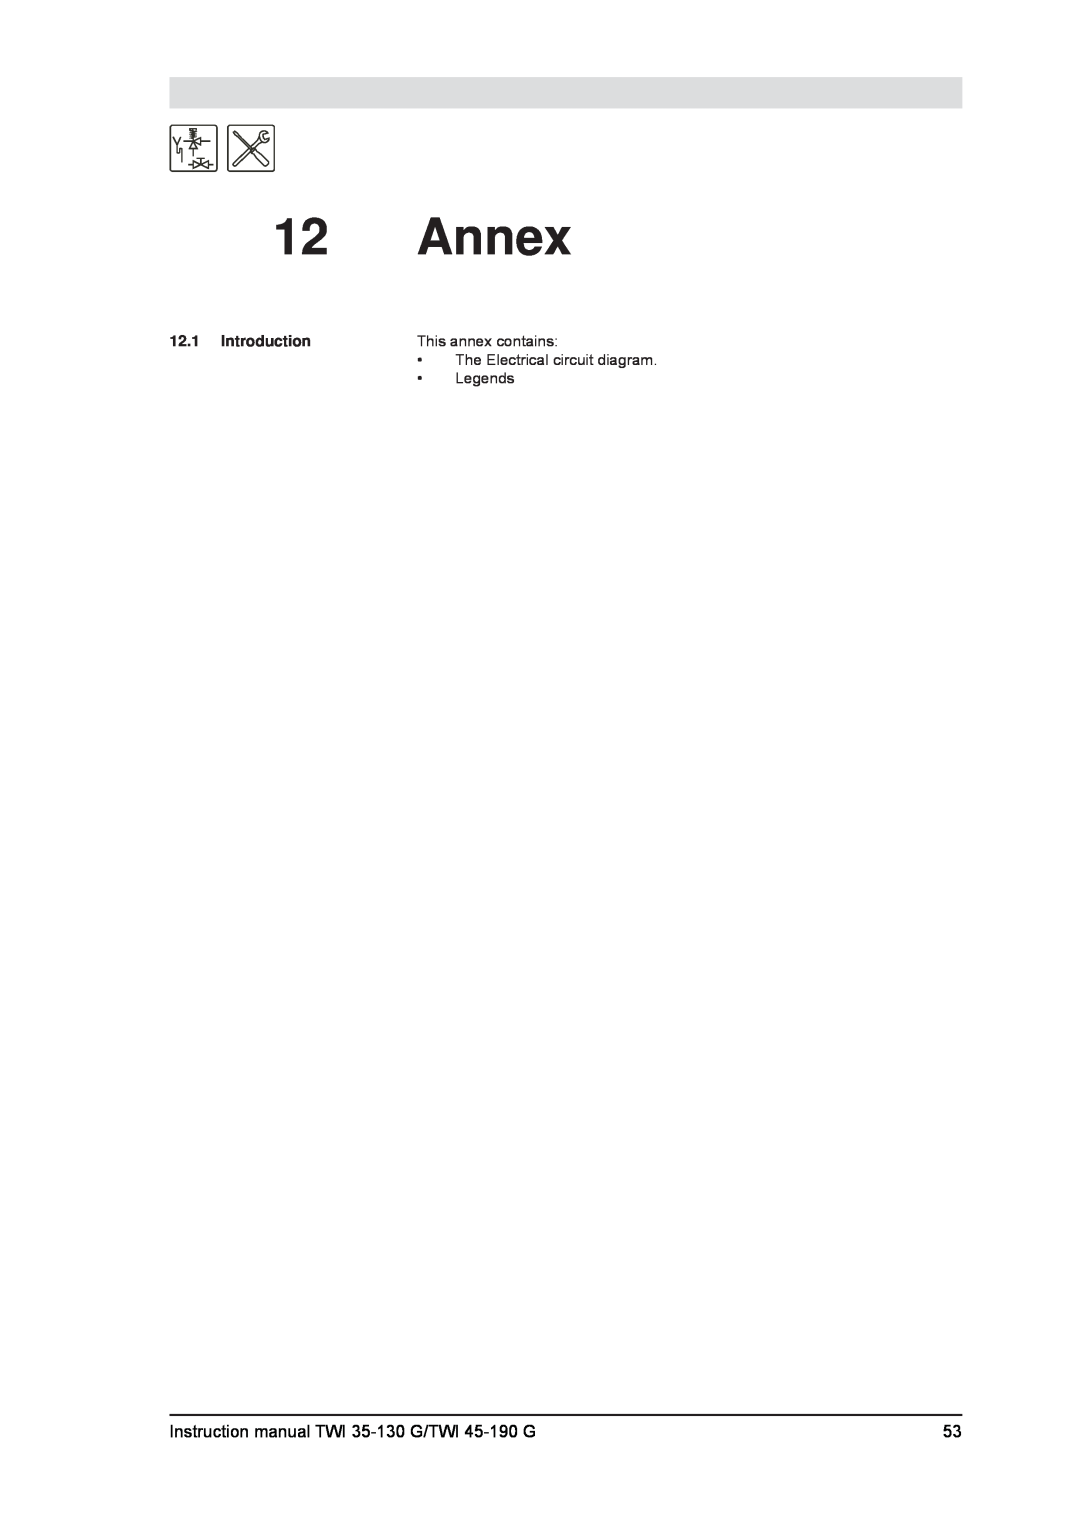 A.O. Smith service manual Annex, Introduction, Instruction manual TWI 35-130 G/TWI 45-190 G 